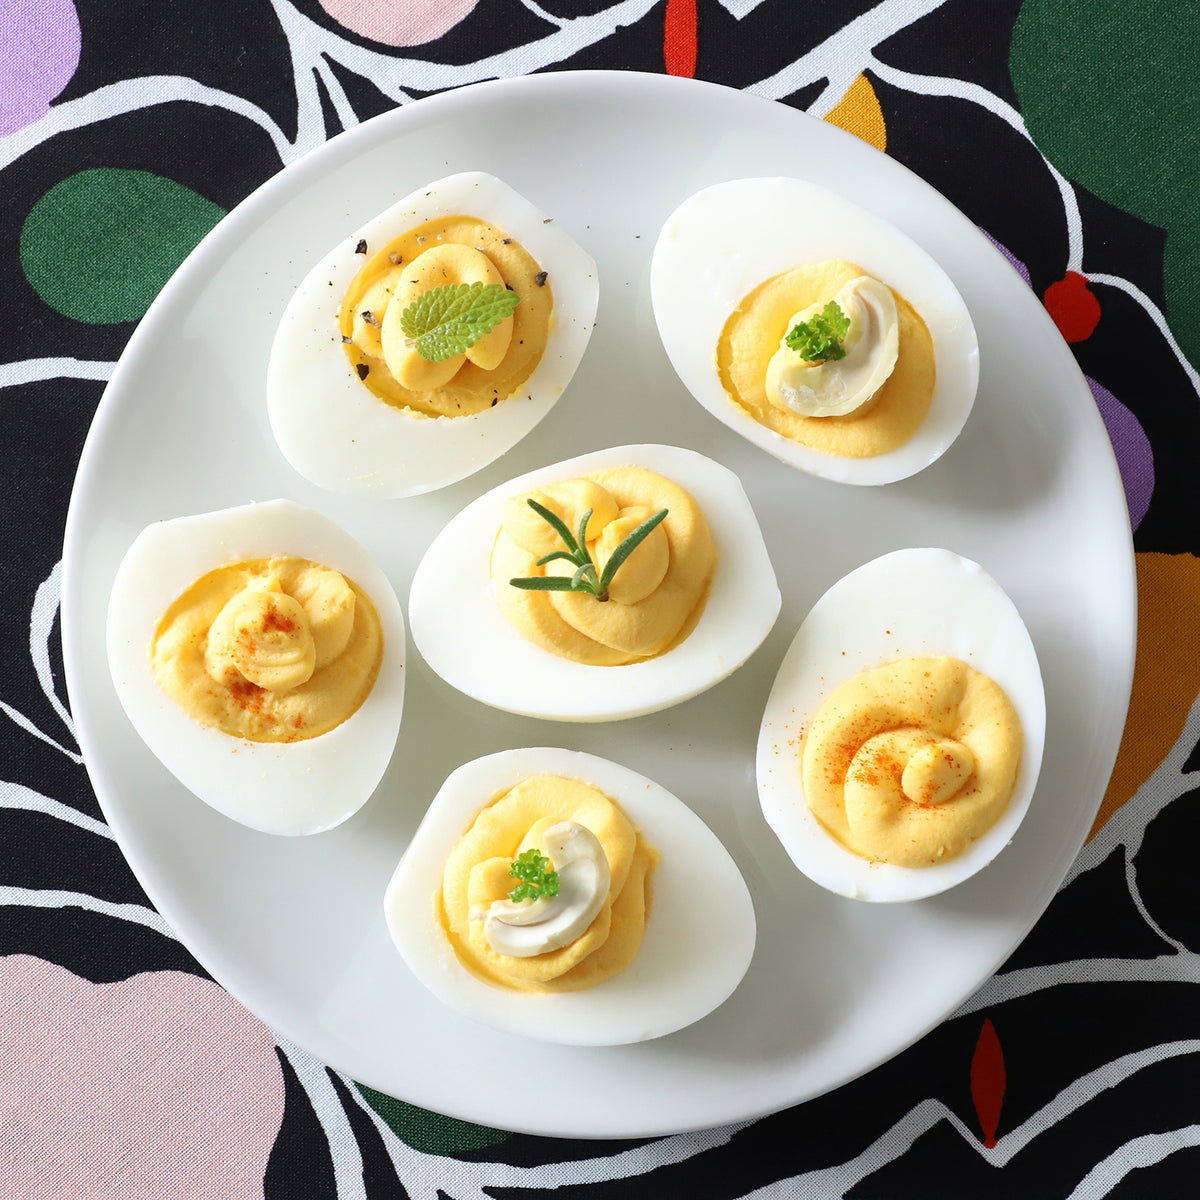 Akebono Microwave Egg Boiler (3 Eggs)